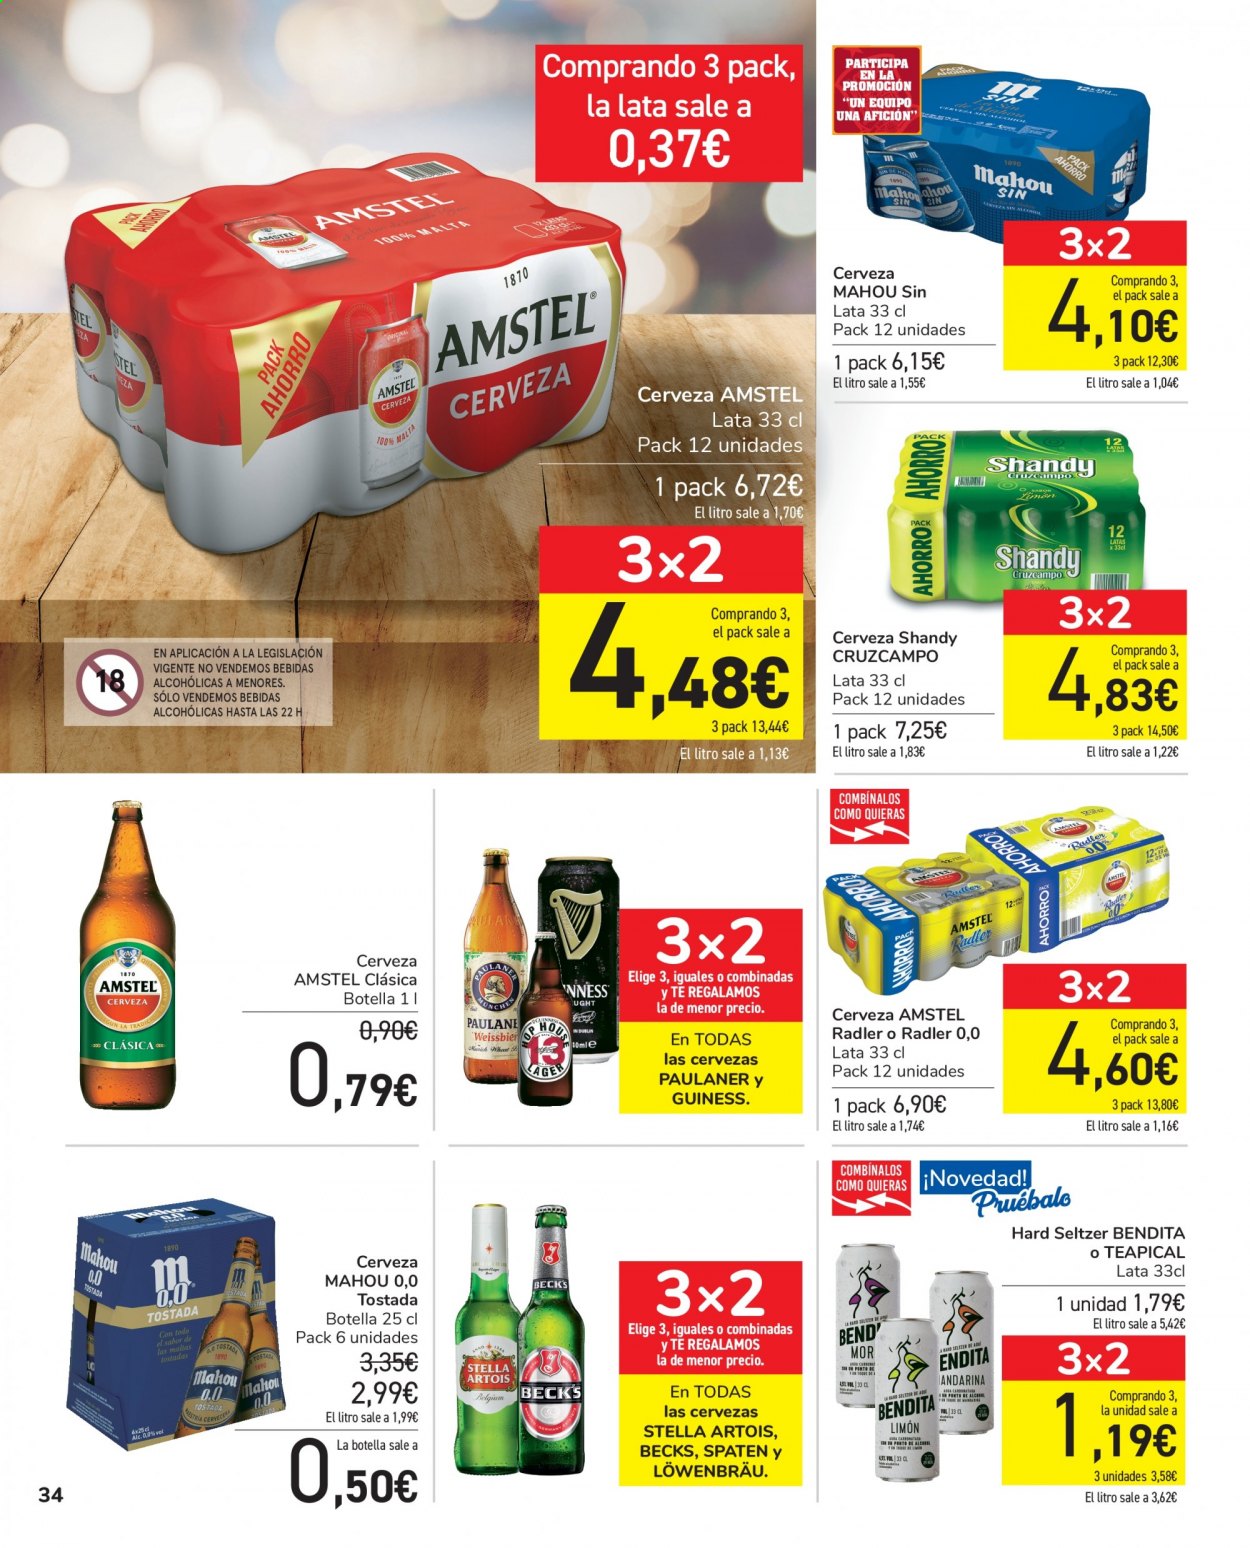 thumbnail - Folleto actual Carrefour - 25/05/21 - 07/06/21 - Ventas - Mahou, Stella Artois, Paulaner, Cruzcampo, bebida, bebida alcohólica. Página 34.